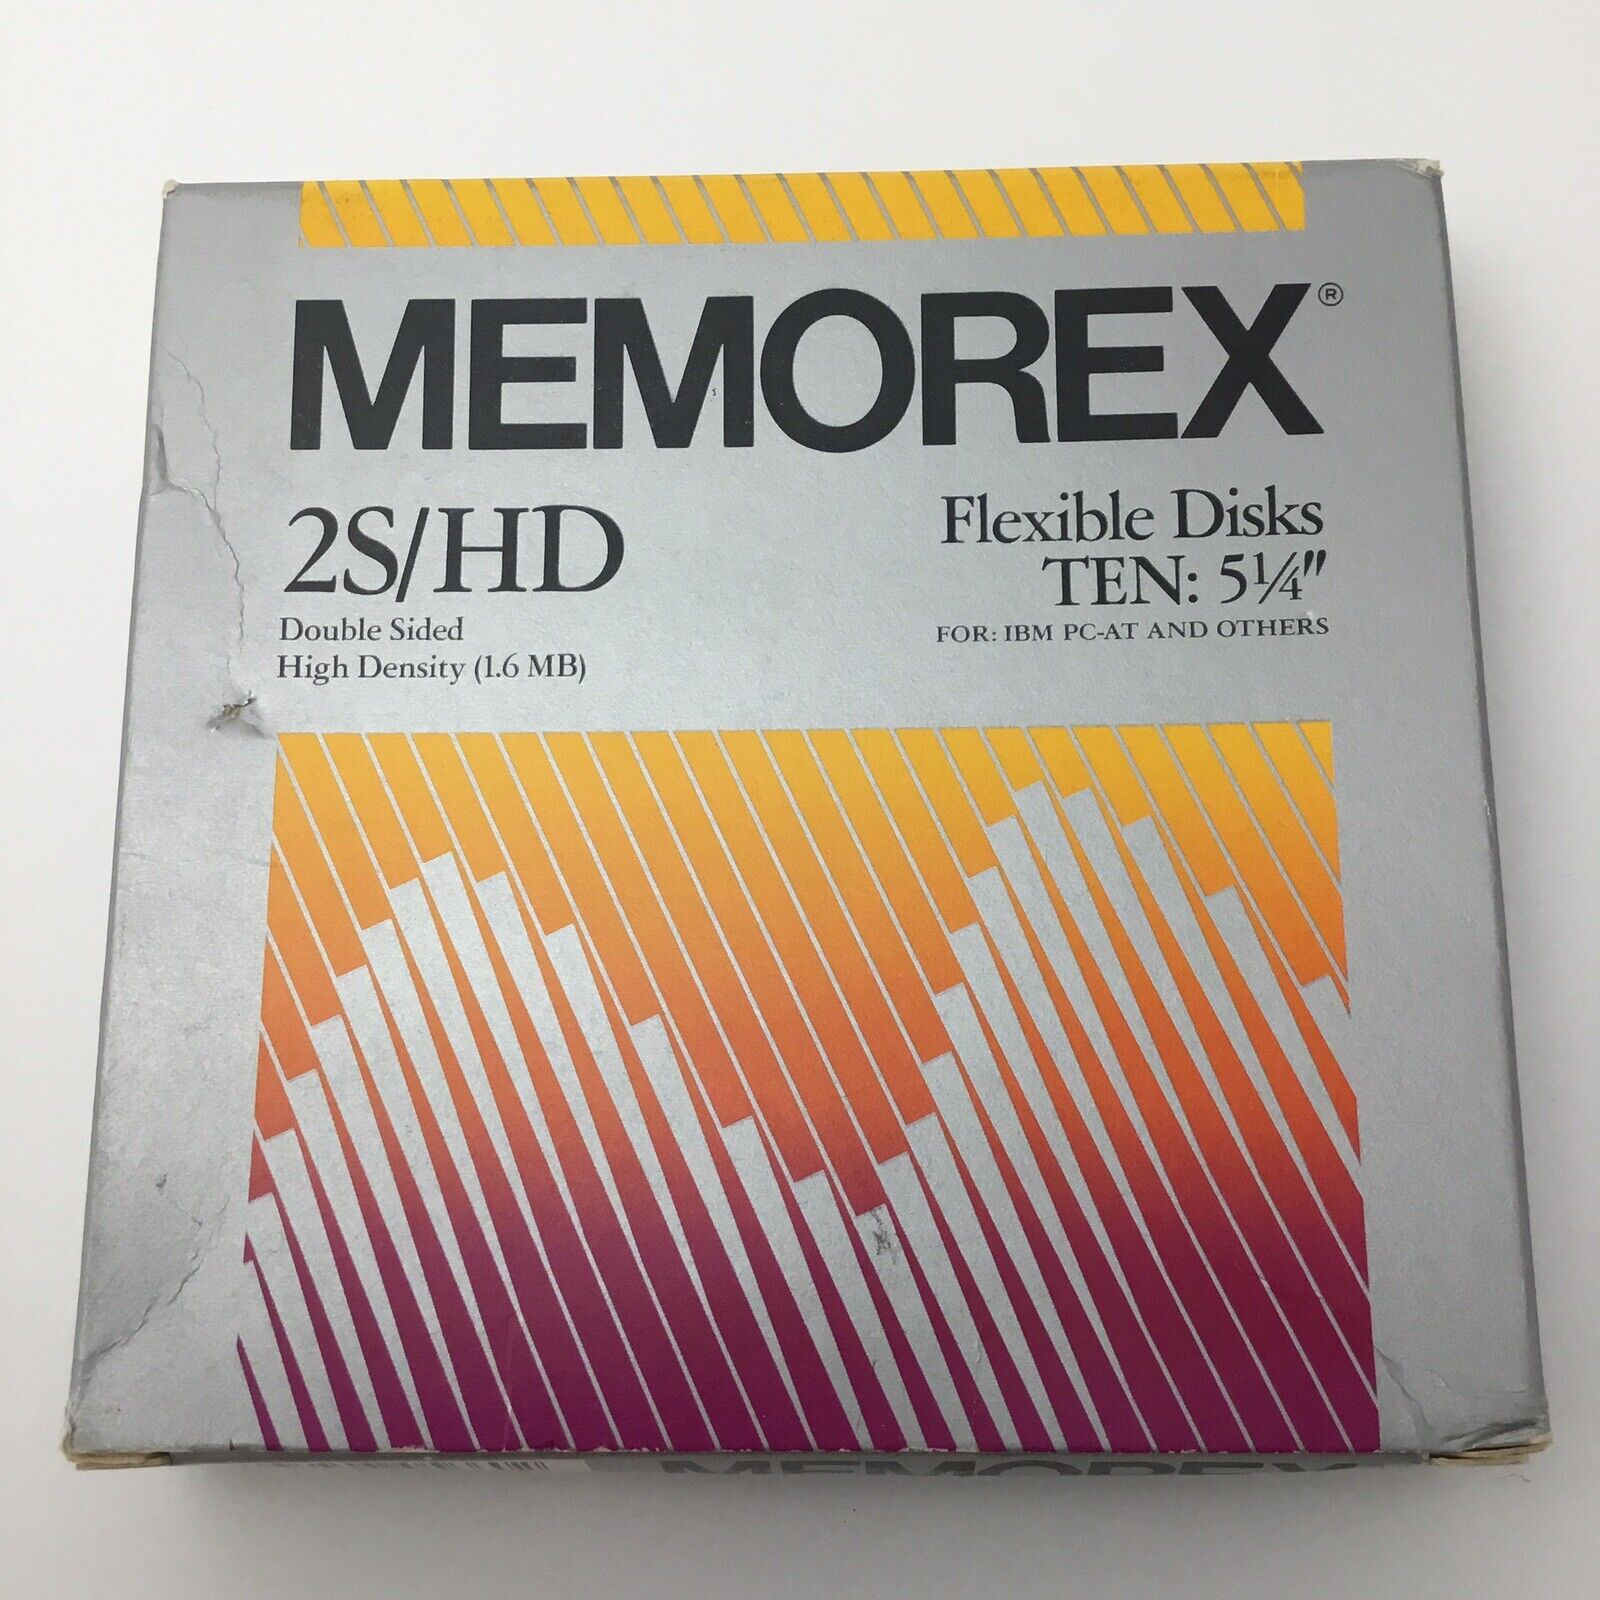 Memorex 2S/HD Flexible Floppy Diskettes (10) 5 ¼” Double Sided